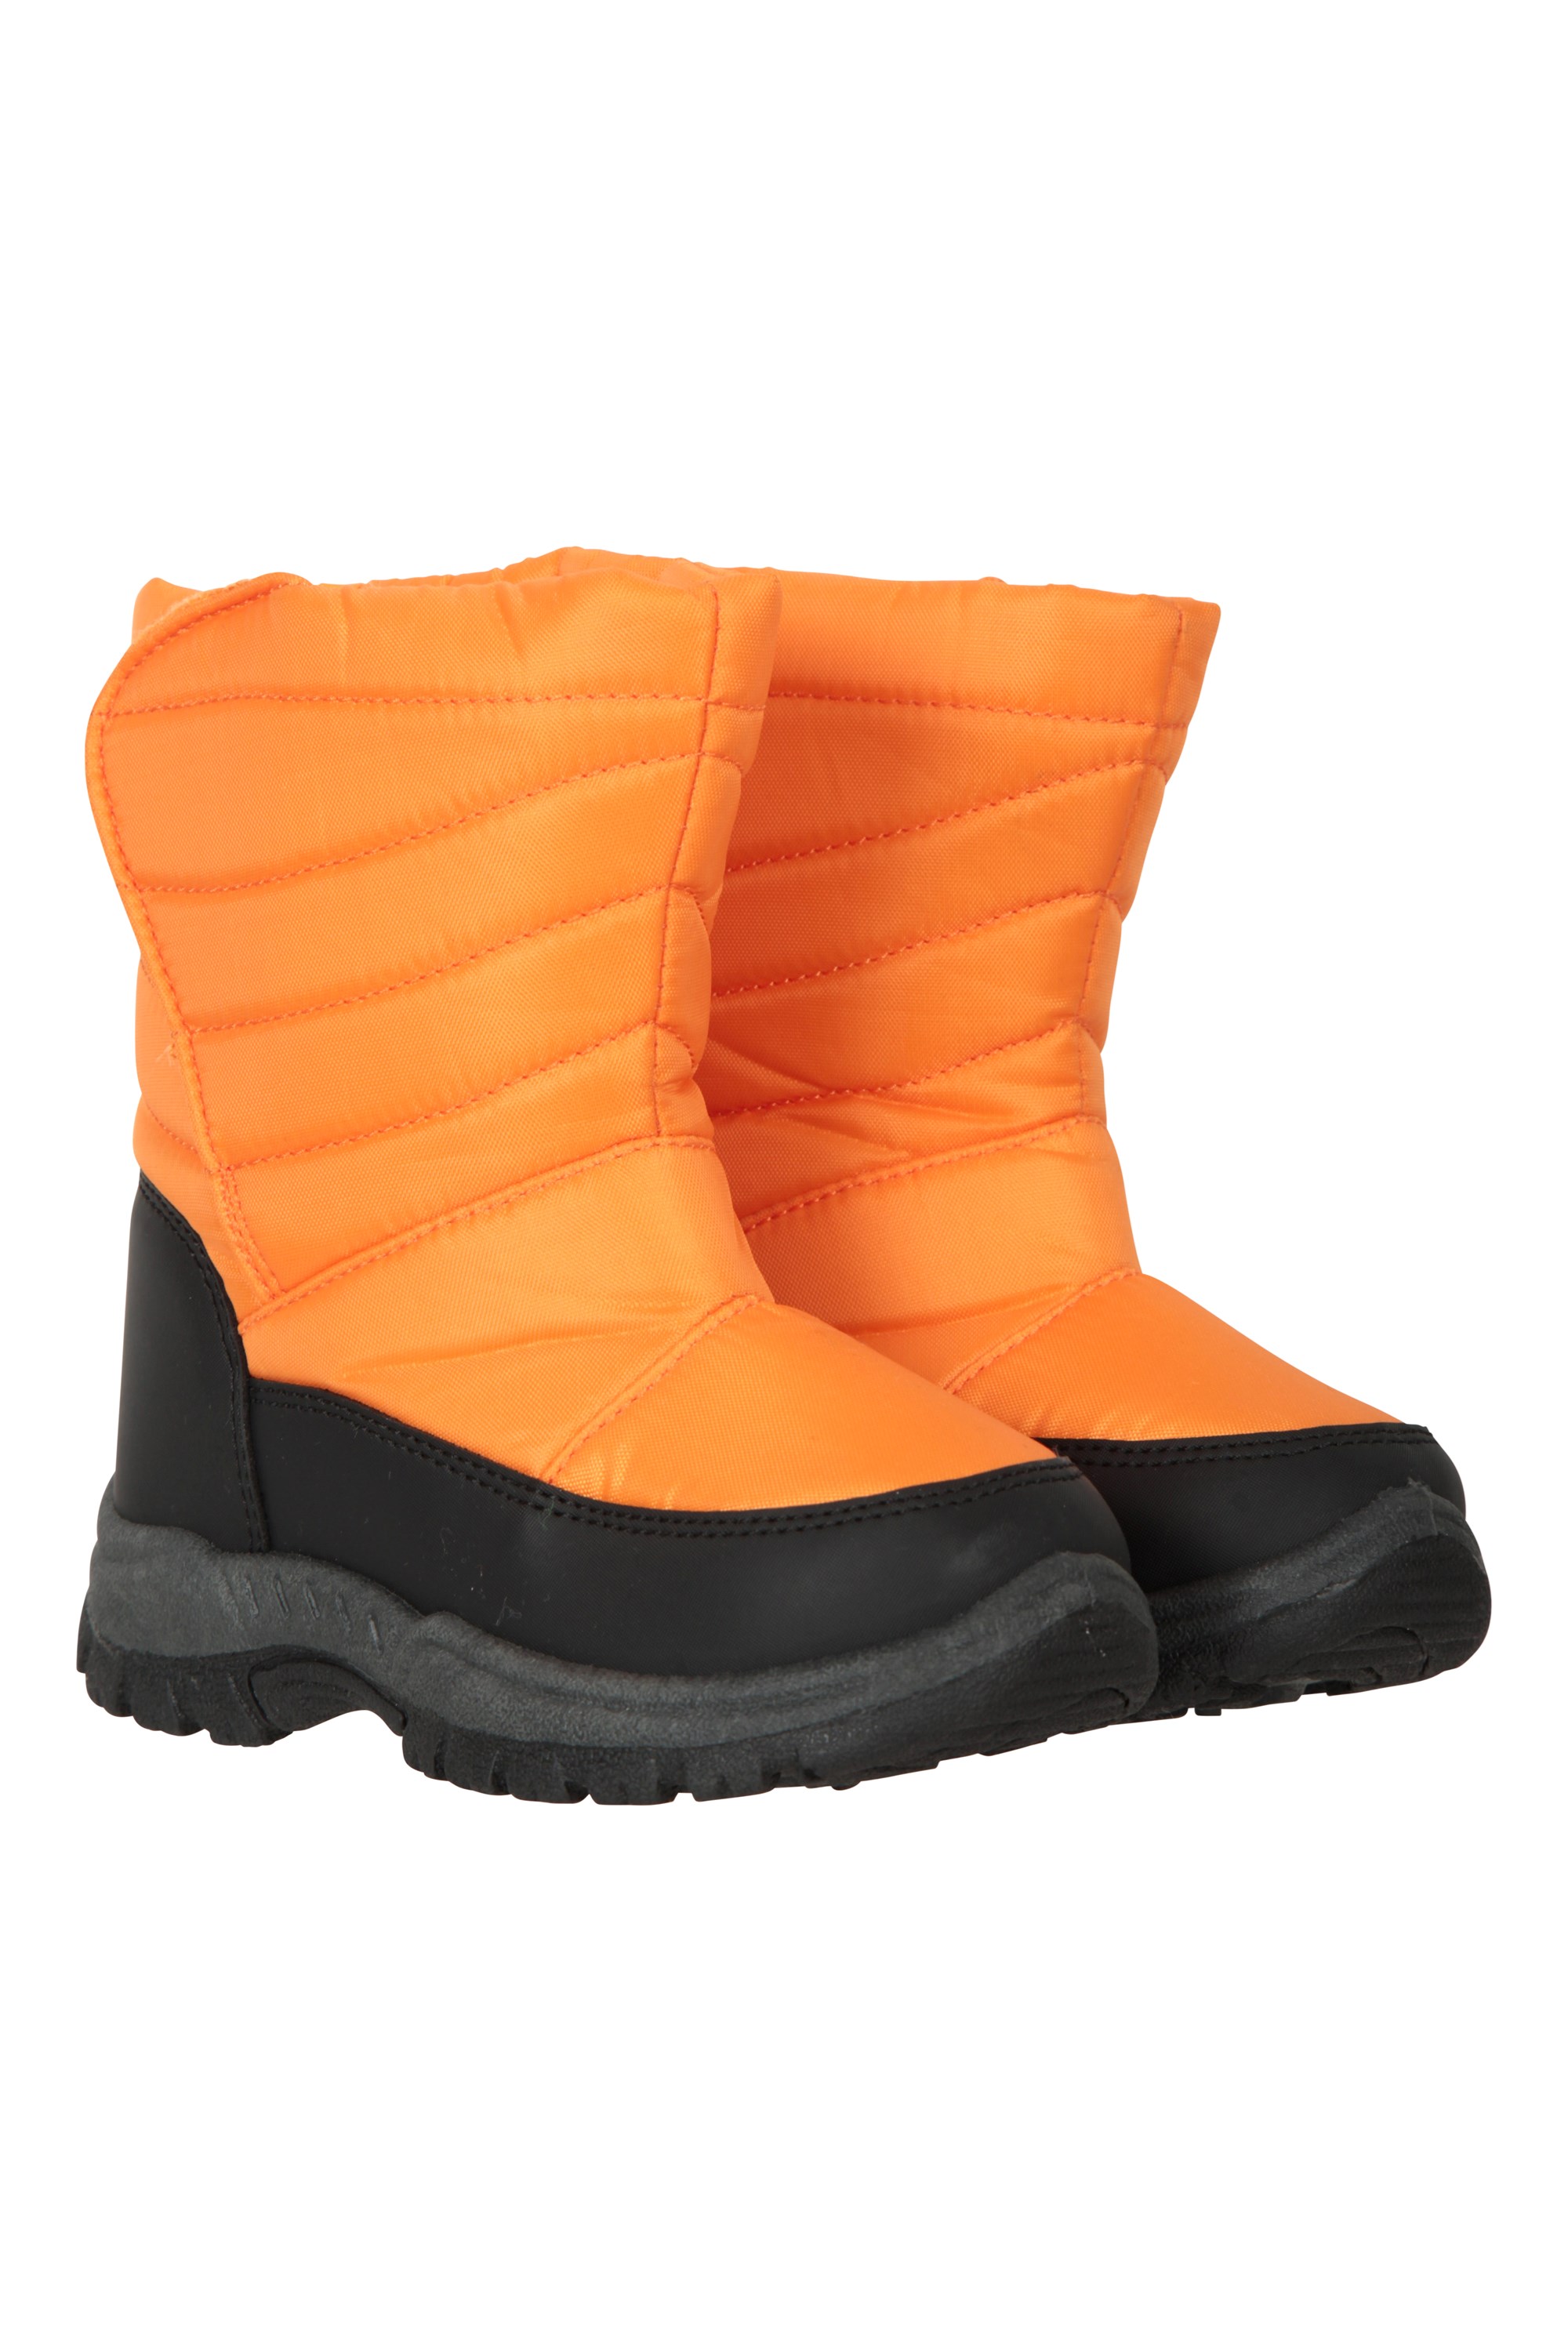 Caribou Toddler Adaptive Snow Boots - Orange